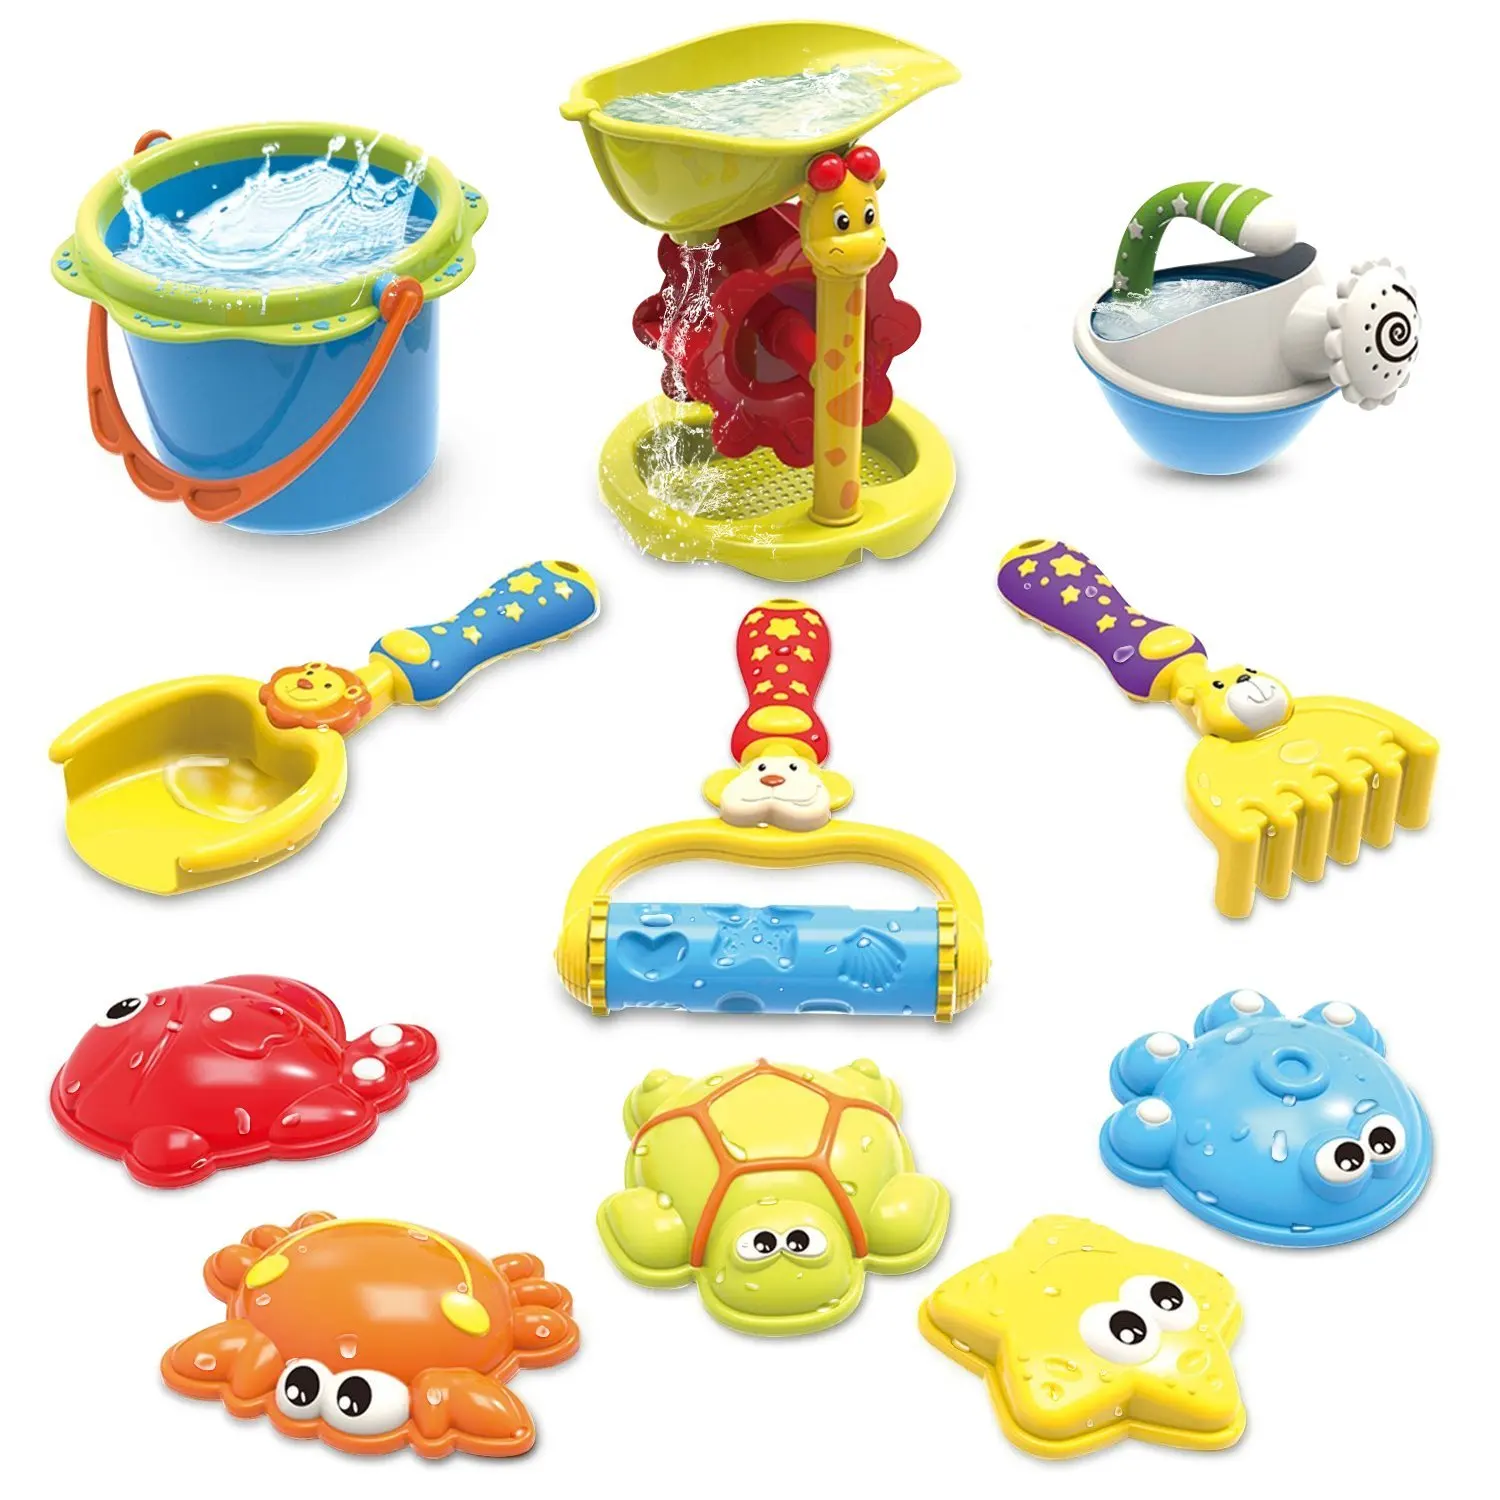 Cheap Best Sand Beach Toy, find Best Sand Beach Toy deals on line at Alibaba.com